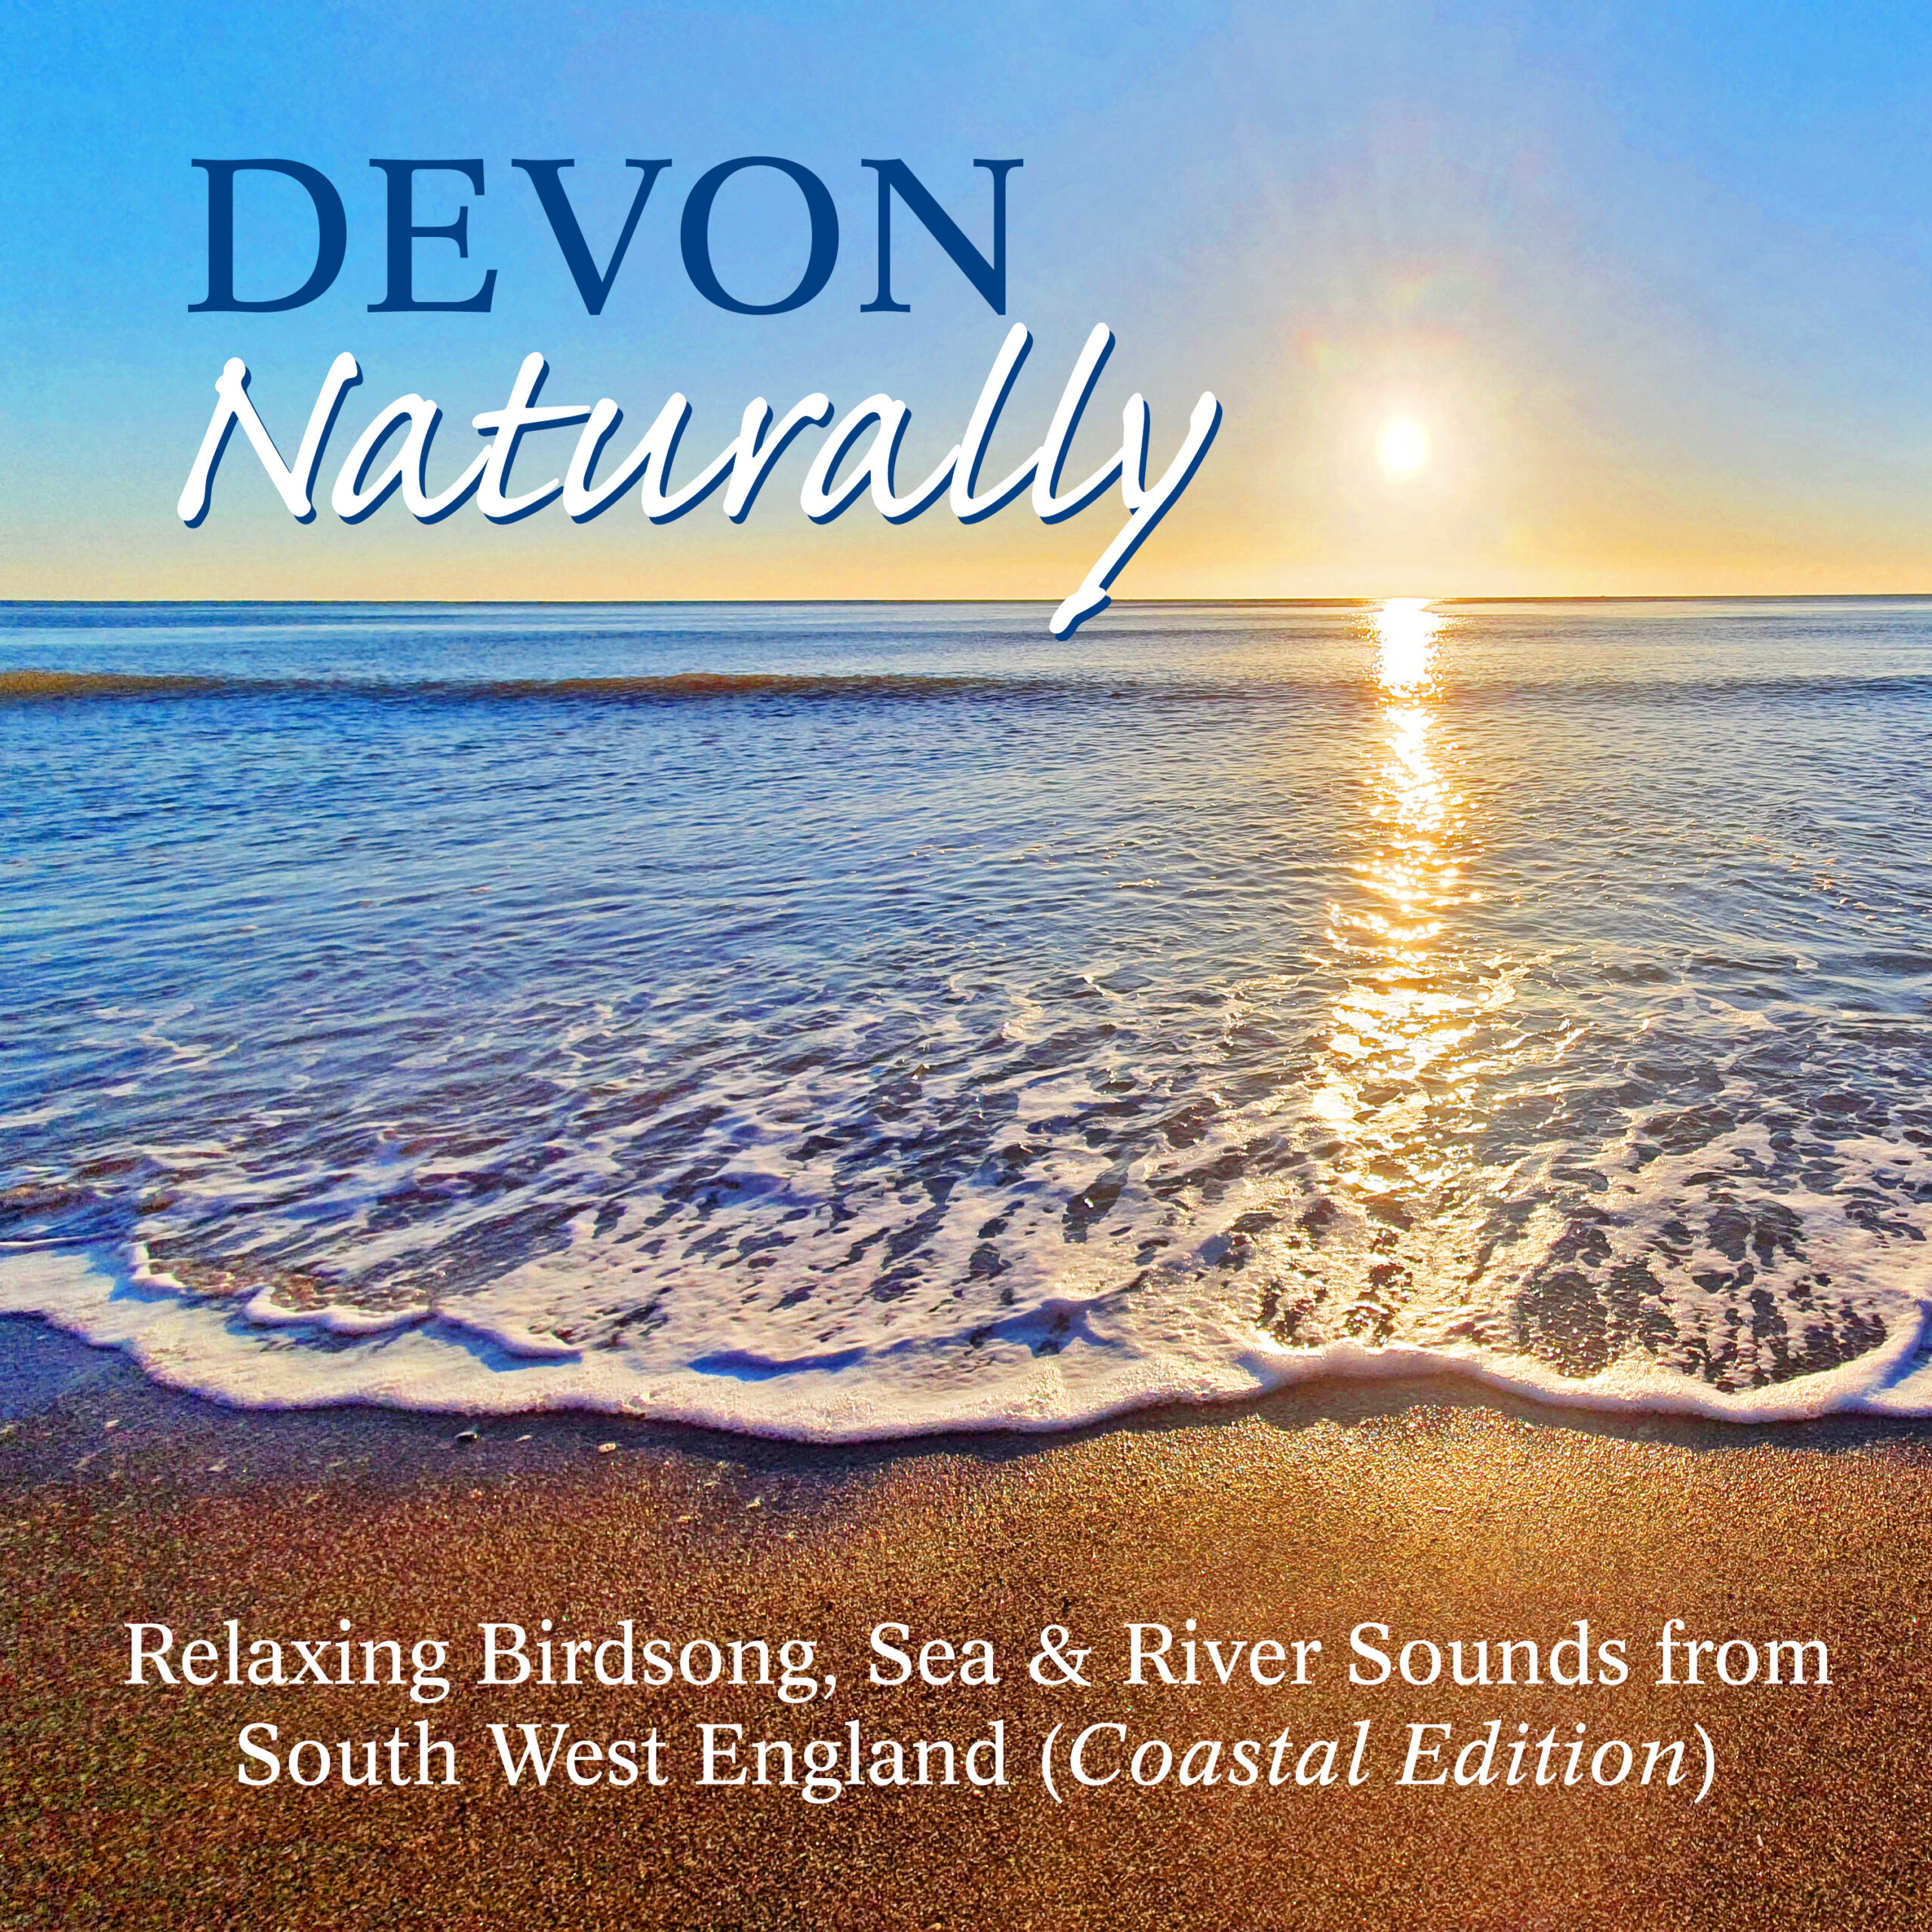 Devon Naturally (Coastal Edition) Front Cover